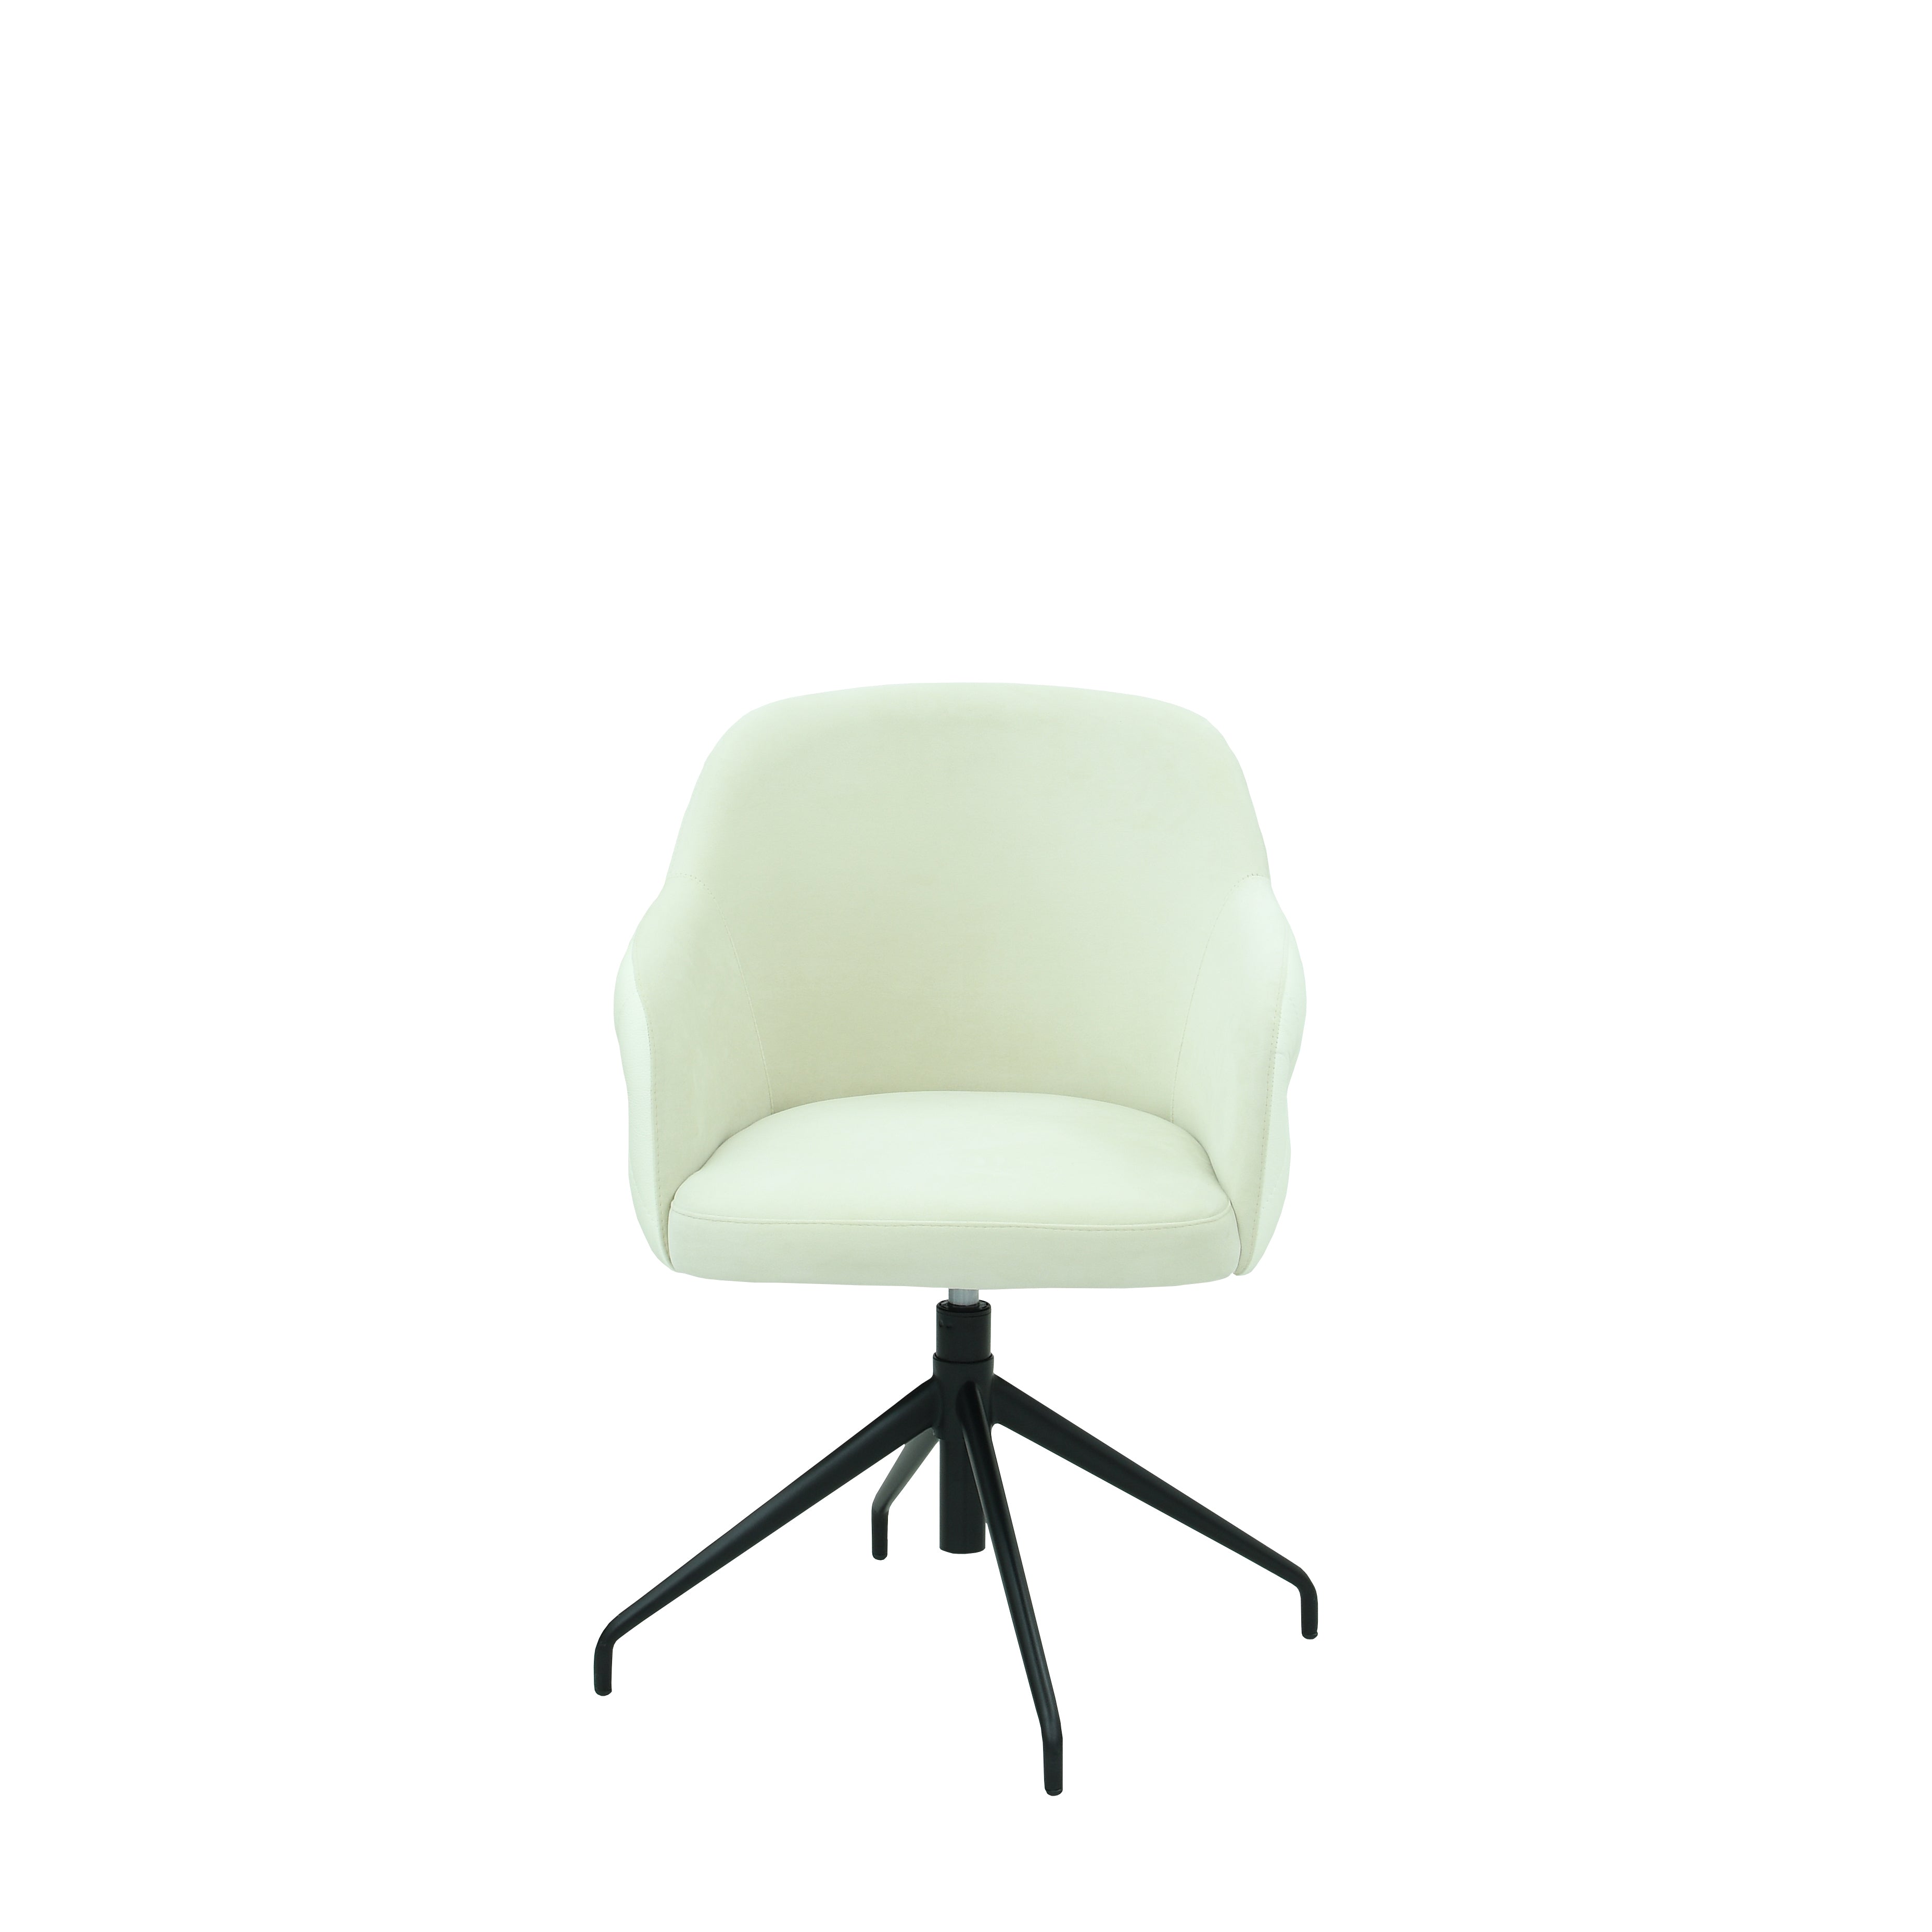 Stuhl aus weißem Stoff oder Leder ✔ Modell TEONA